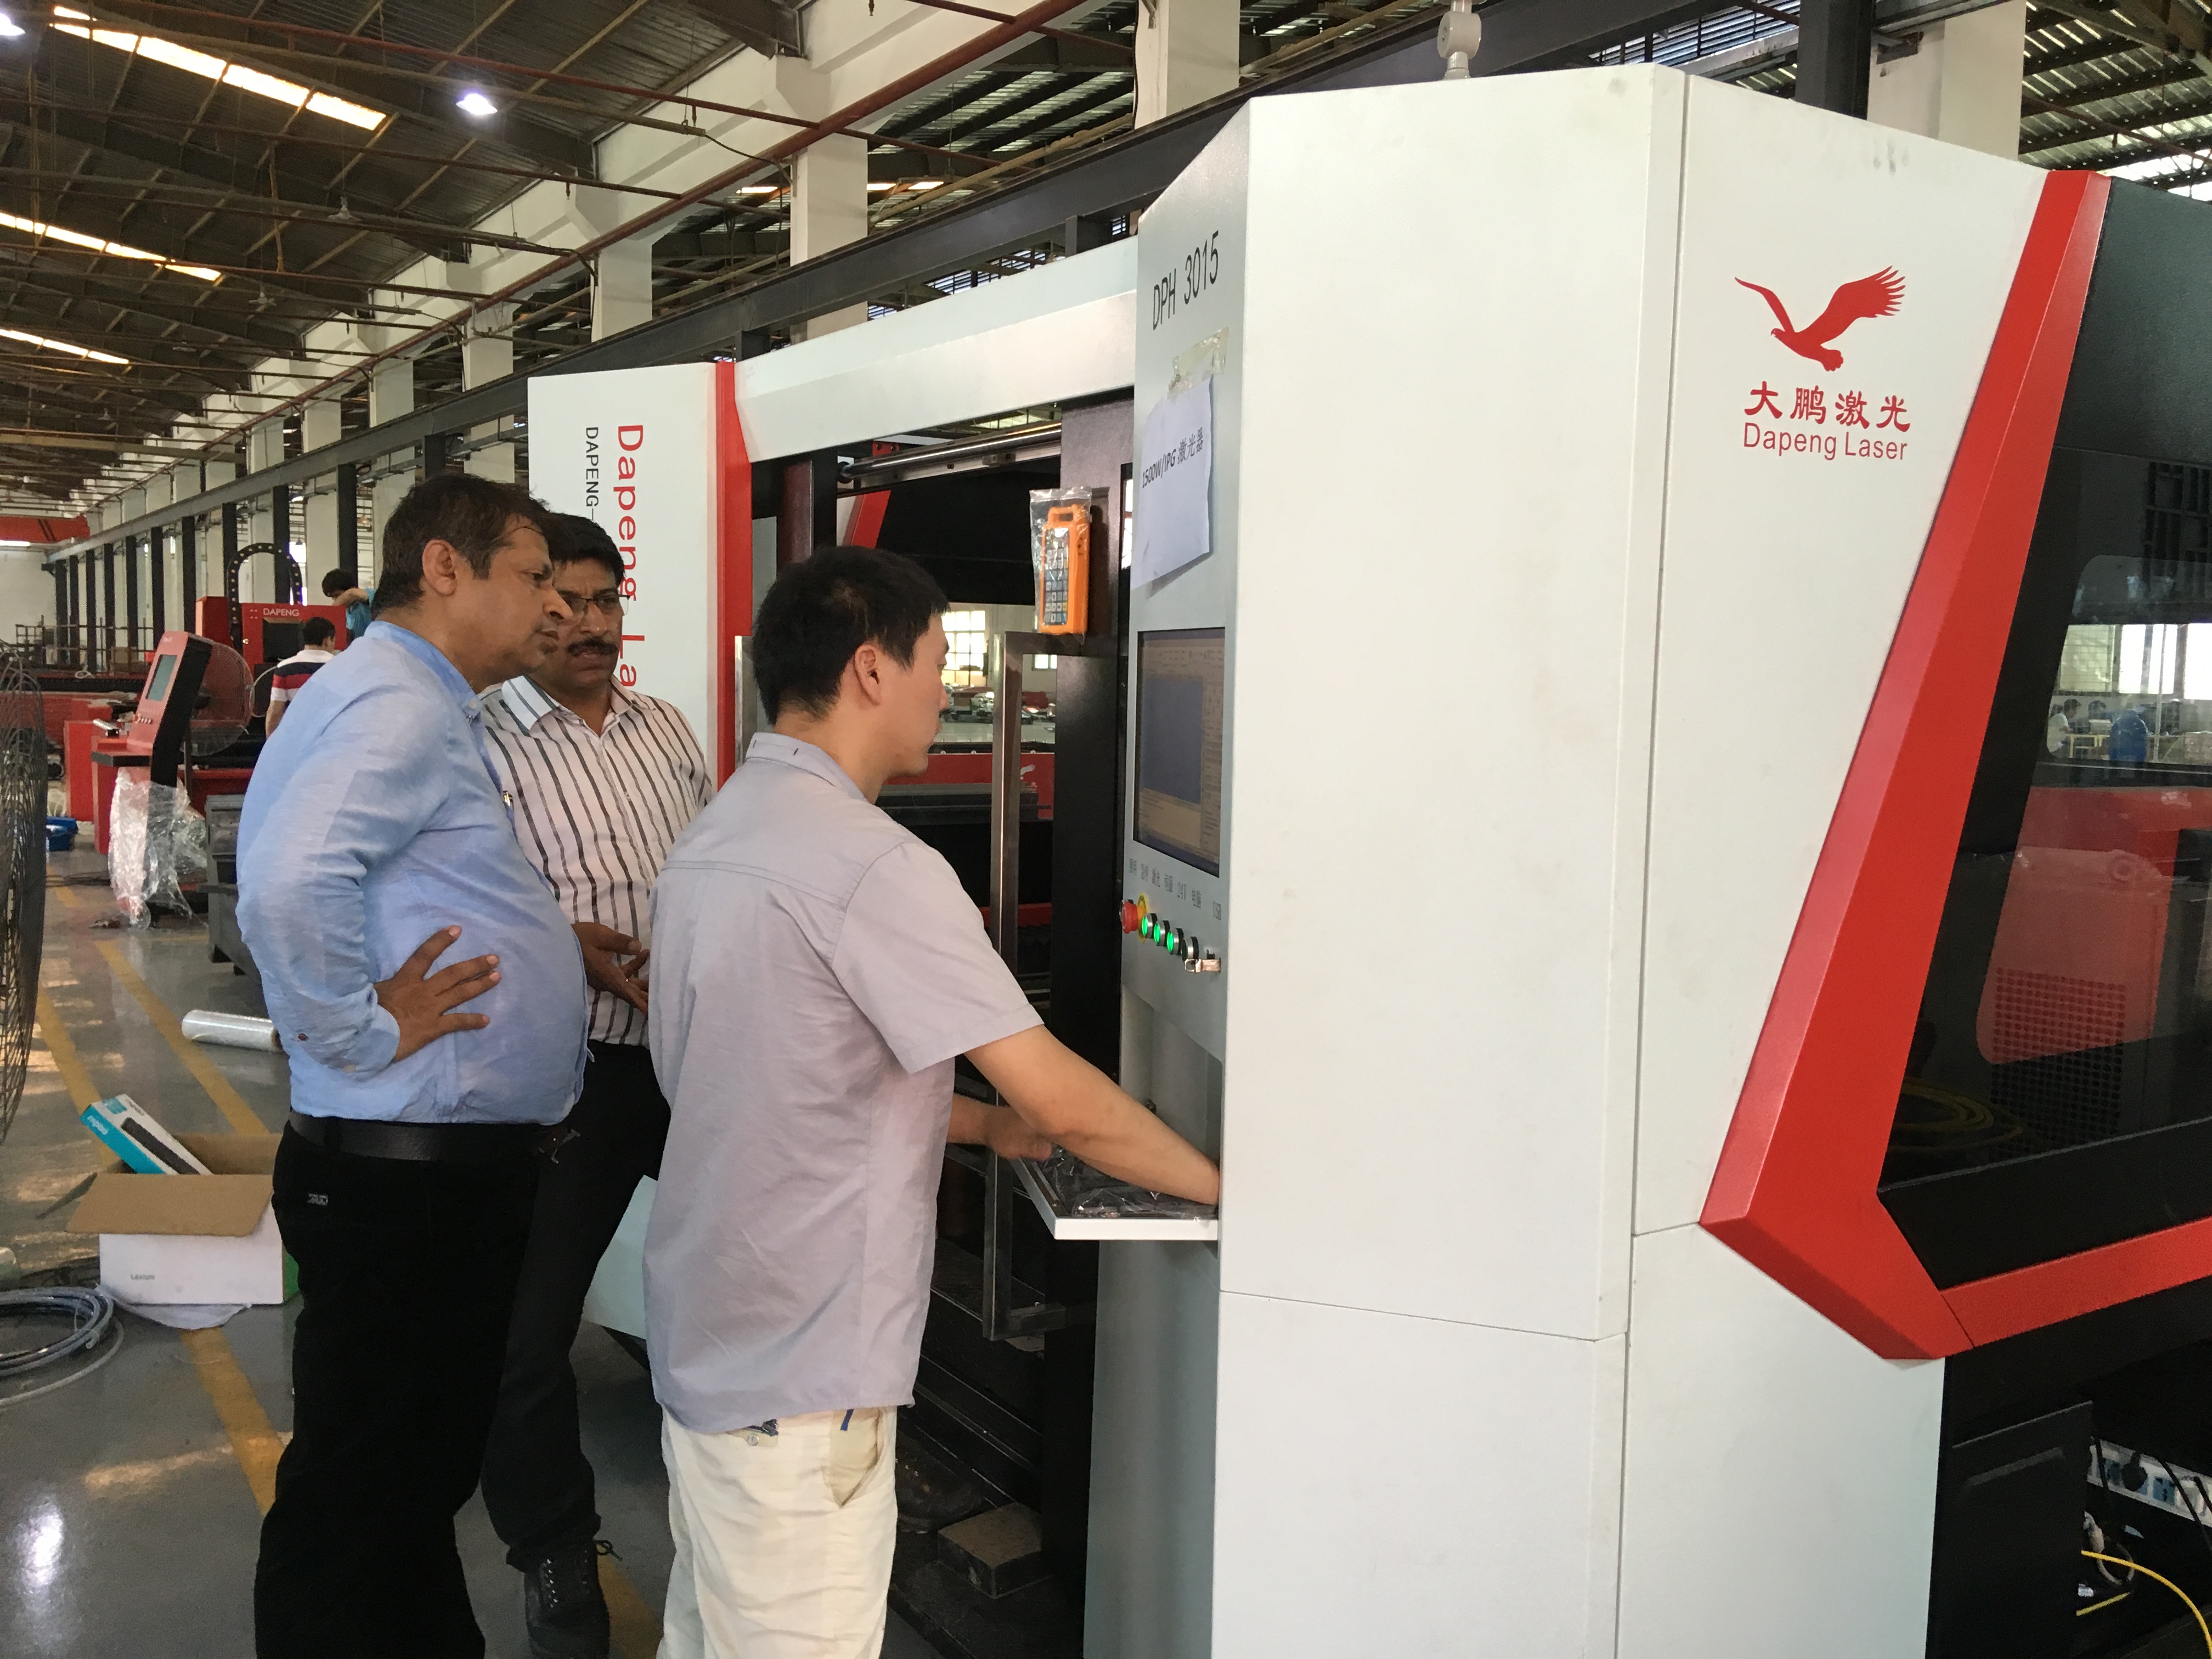 India customer visiting dp laser 2017-6-5 2